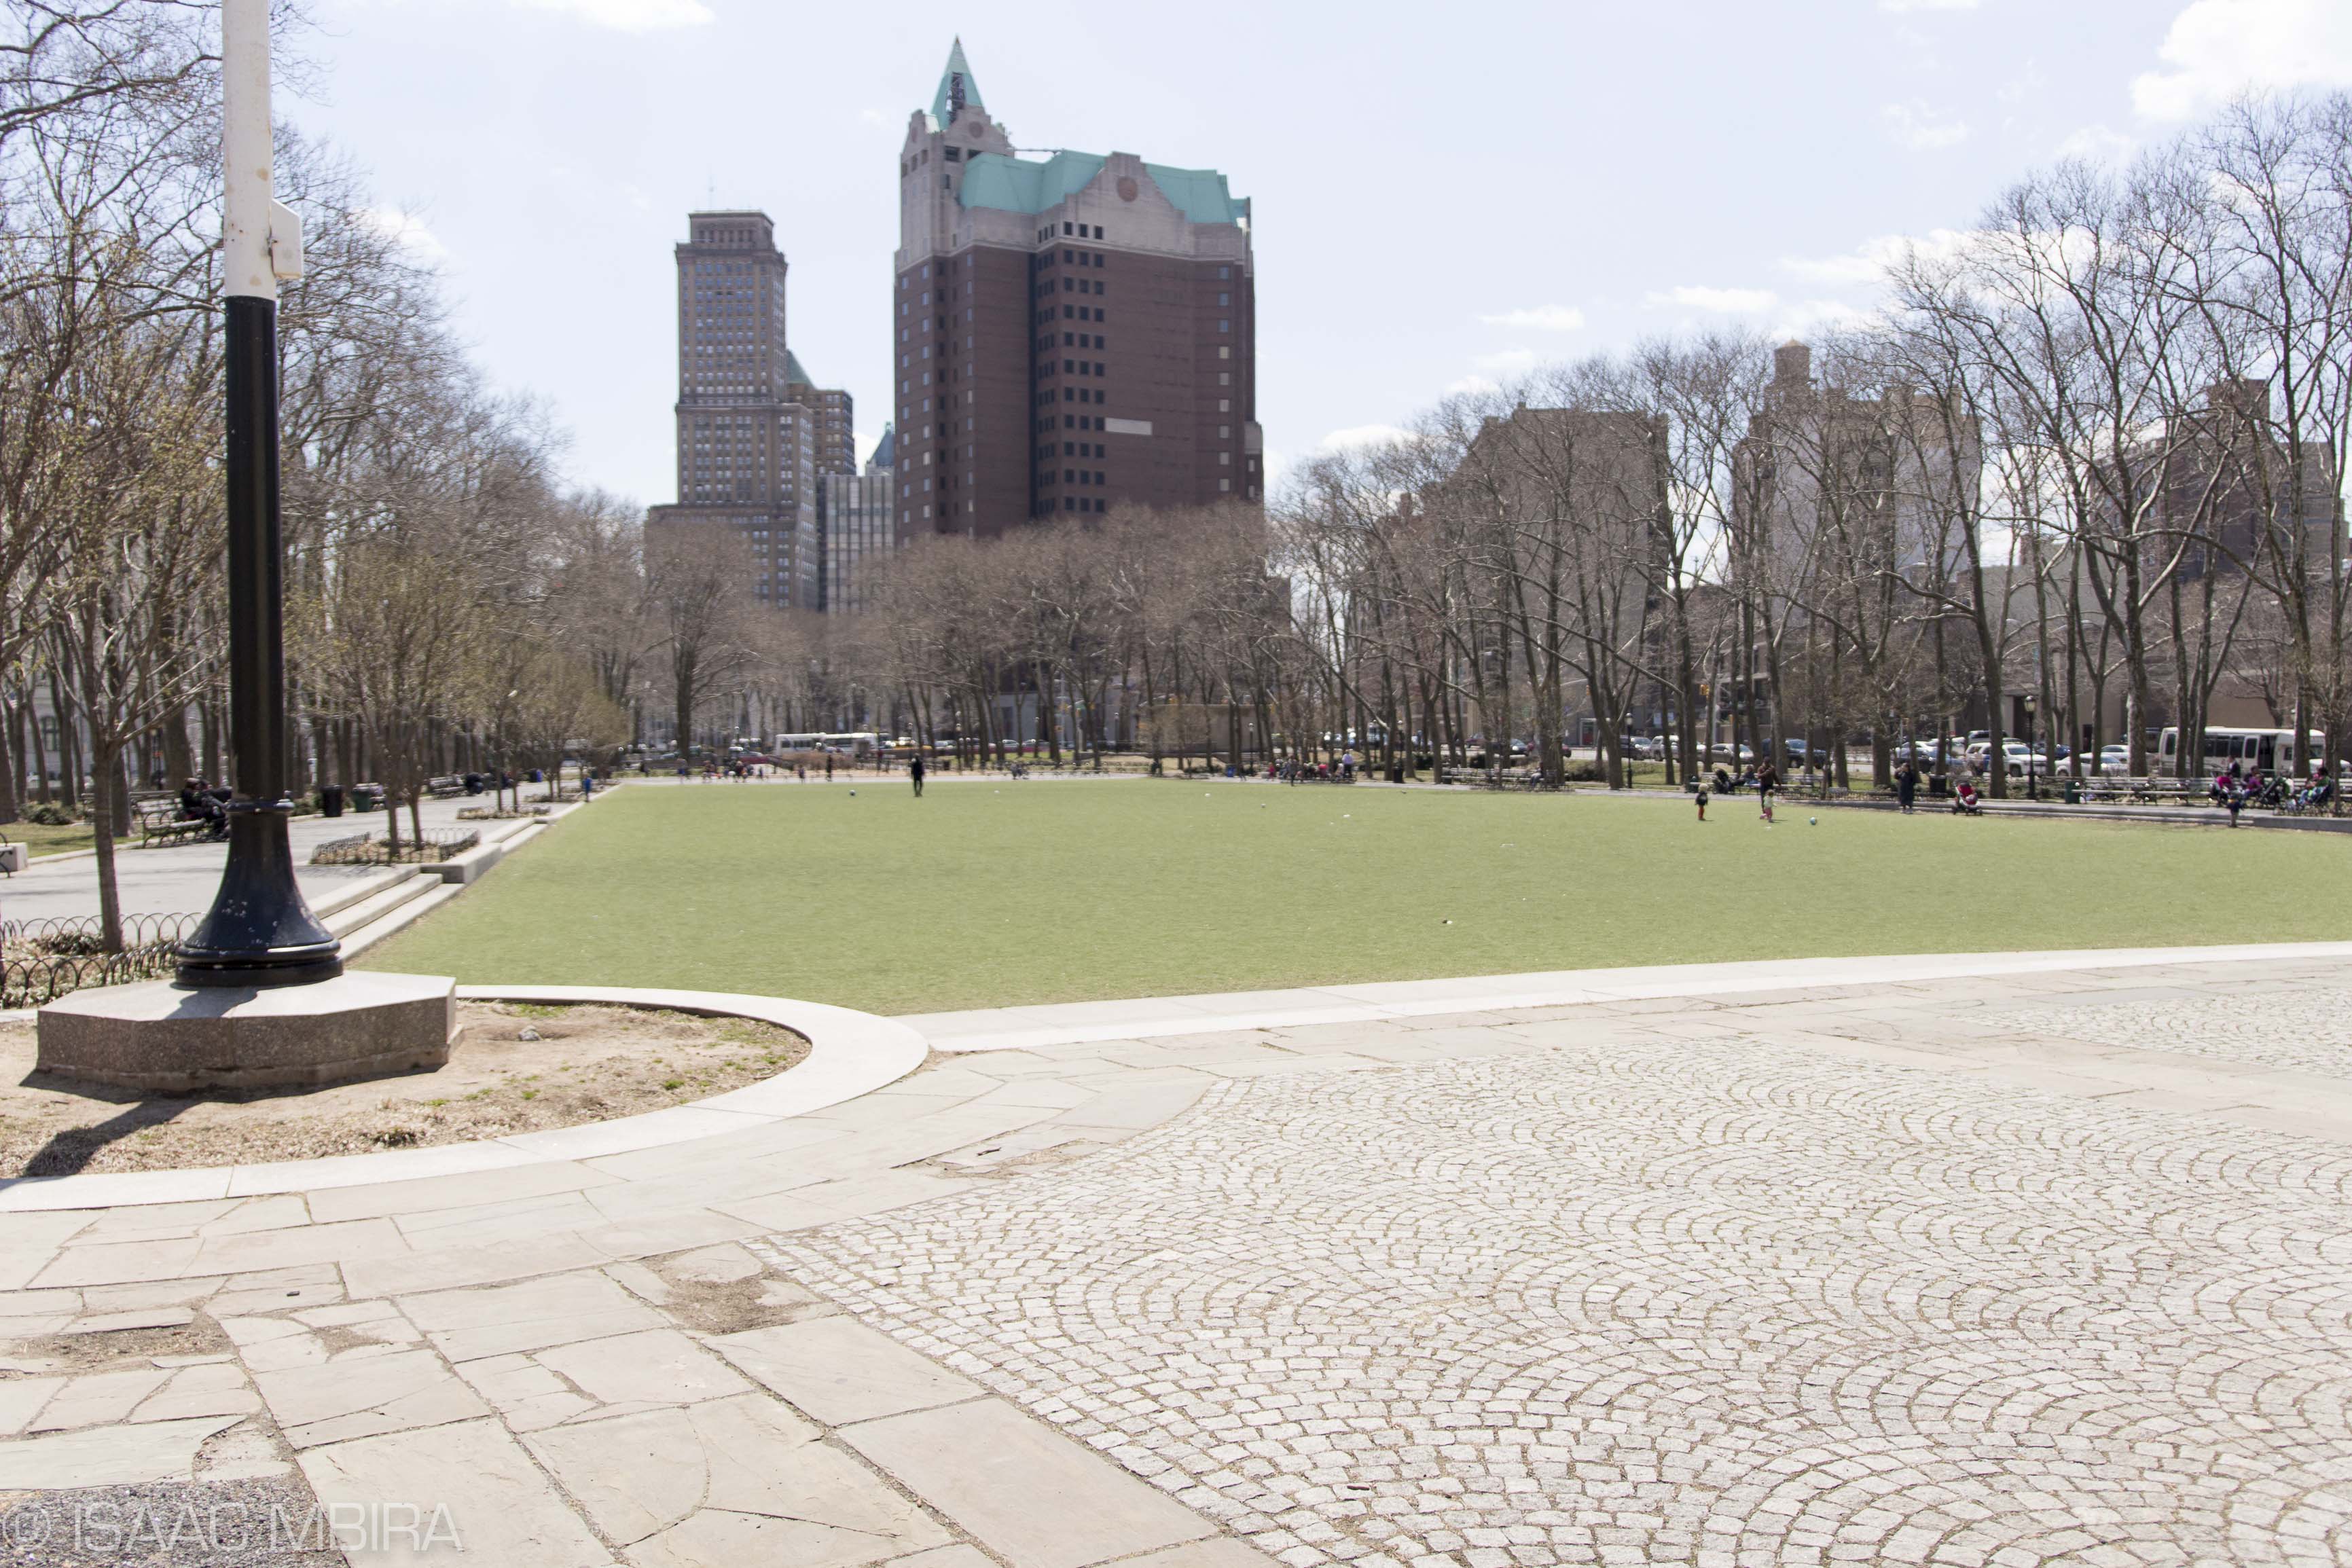 Cadman Plaza Park turf